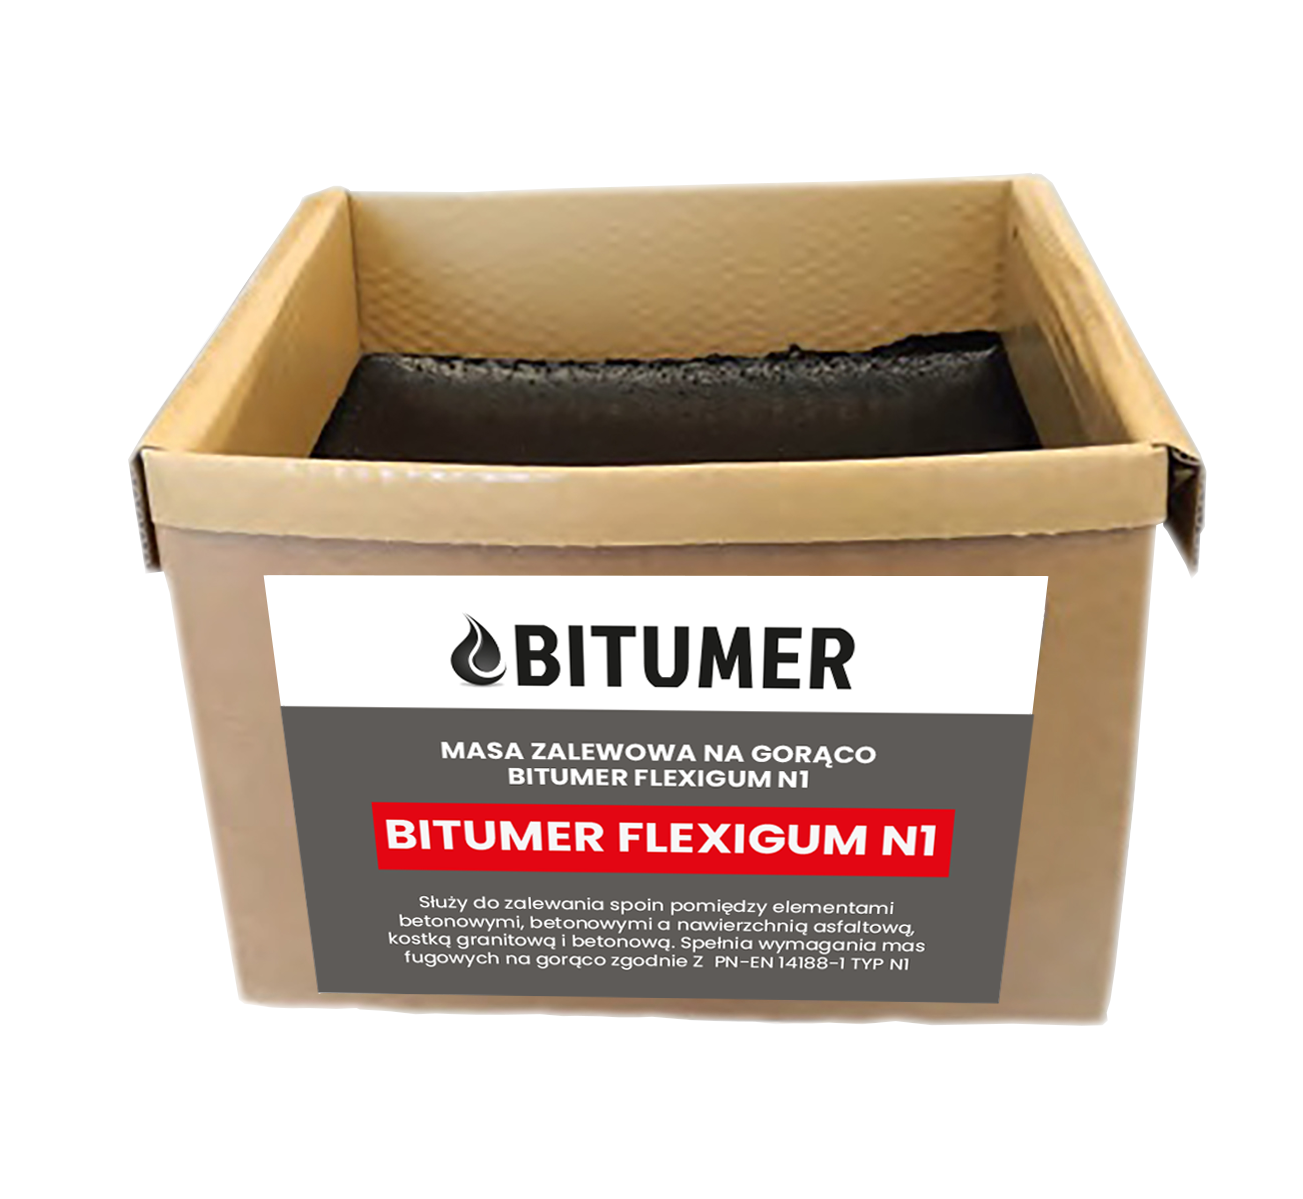 Bitumer Flexigum N1